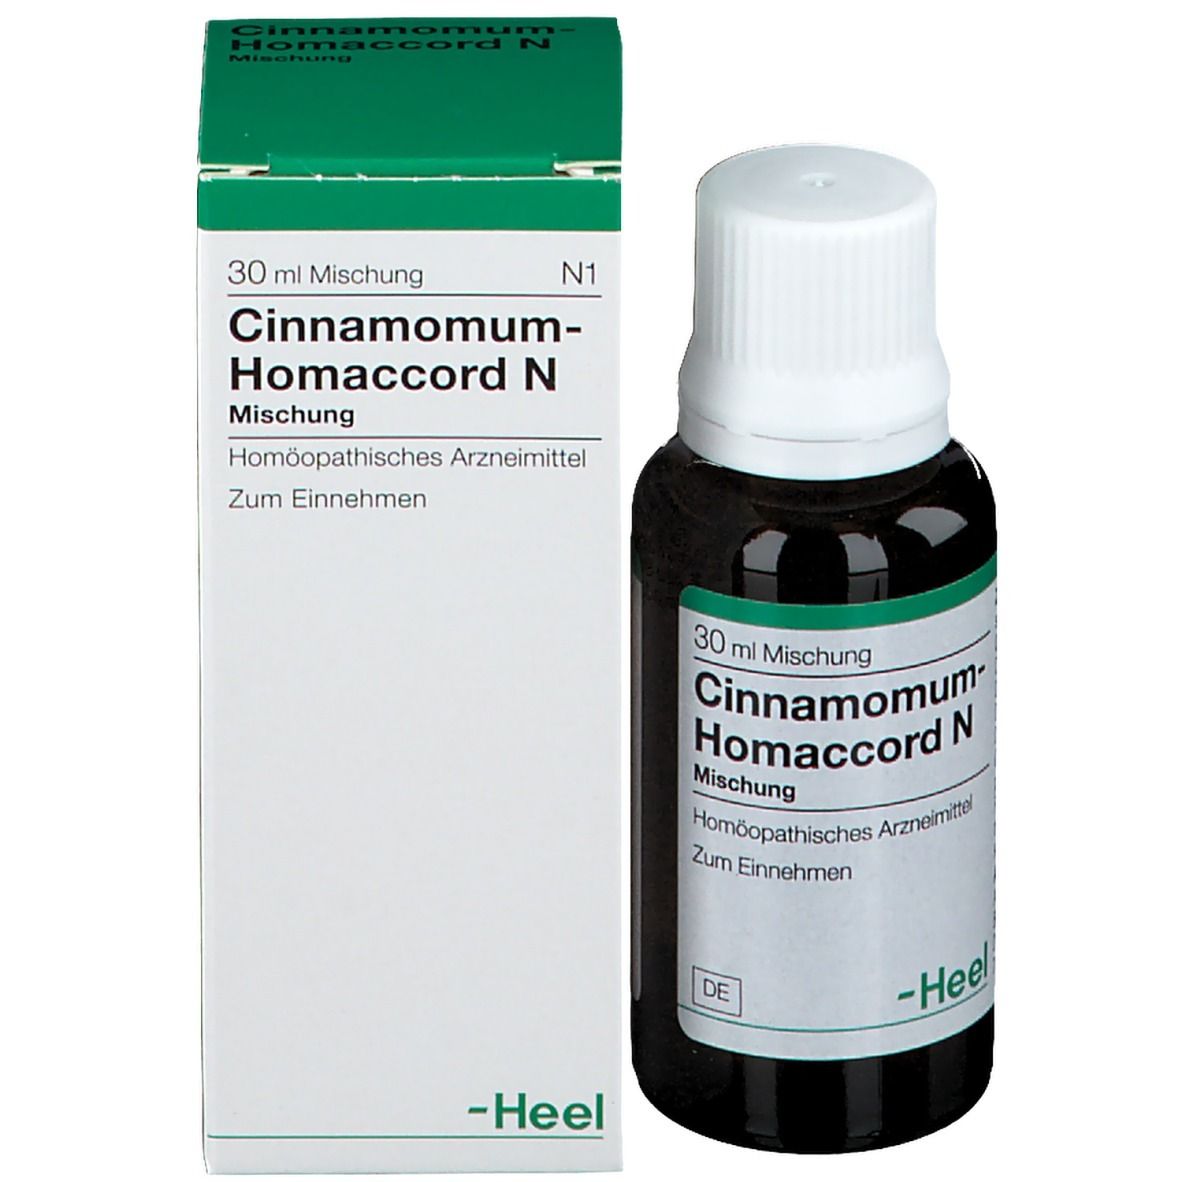 Cinnamomum-Homaccord® N Mischung